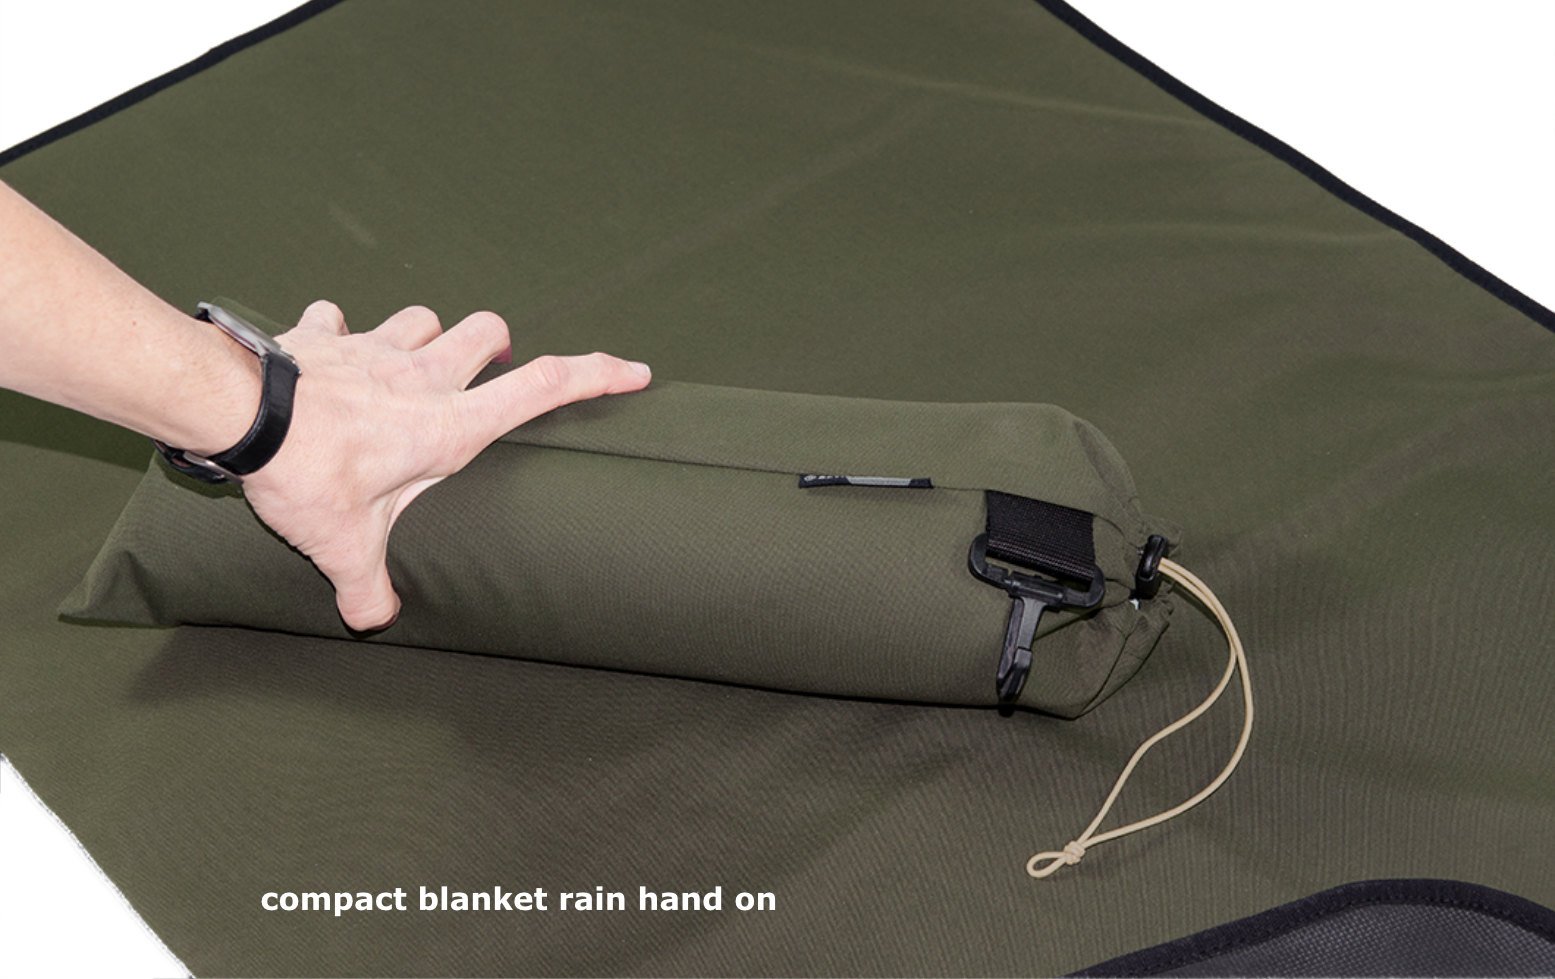 Compact Blanket RAIN